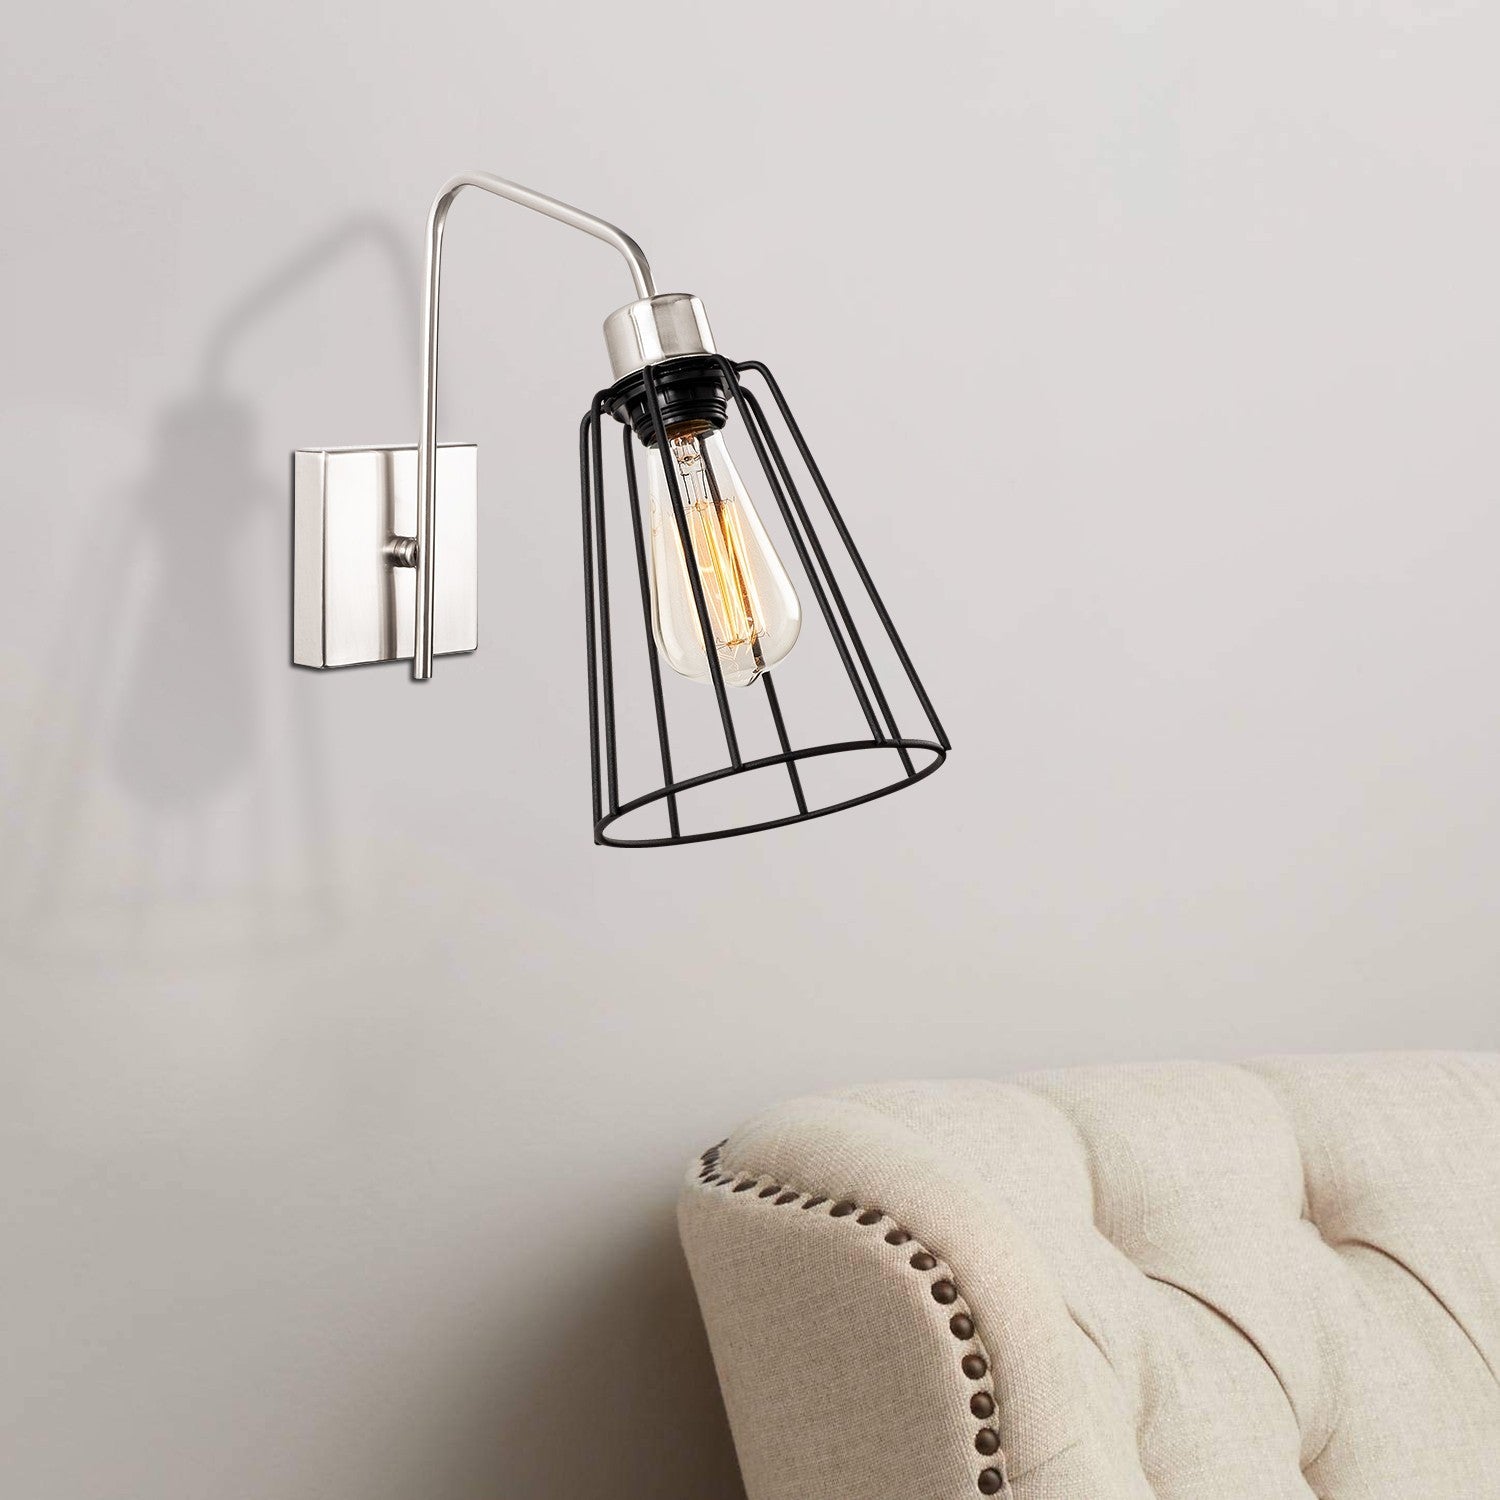 Lampa de perete Ve-6005, crom/negru, metal, 15x32x33 cm